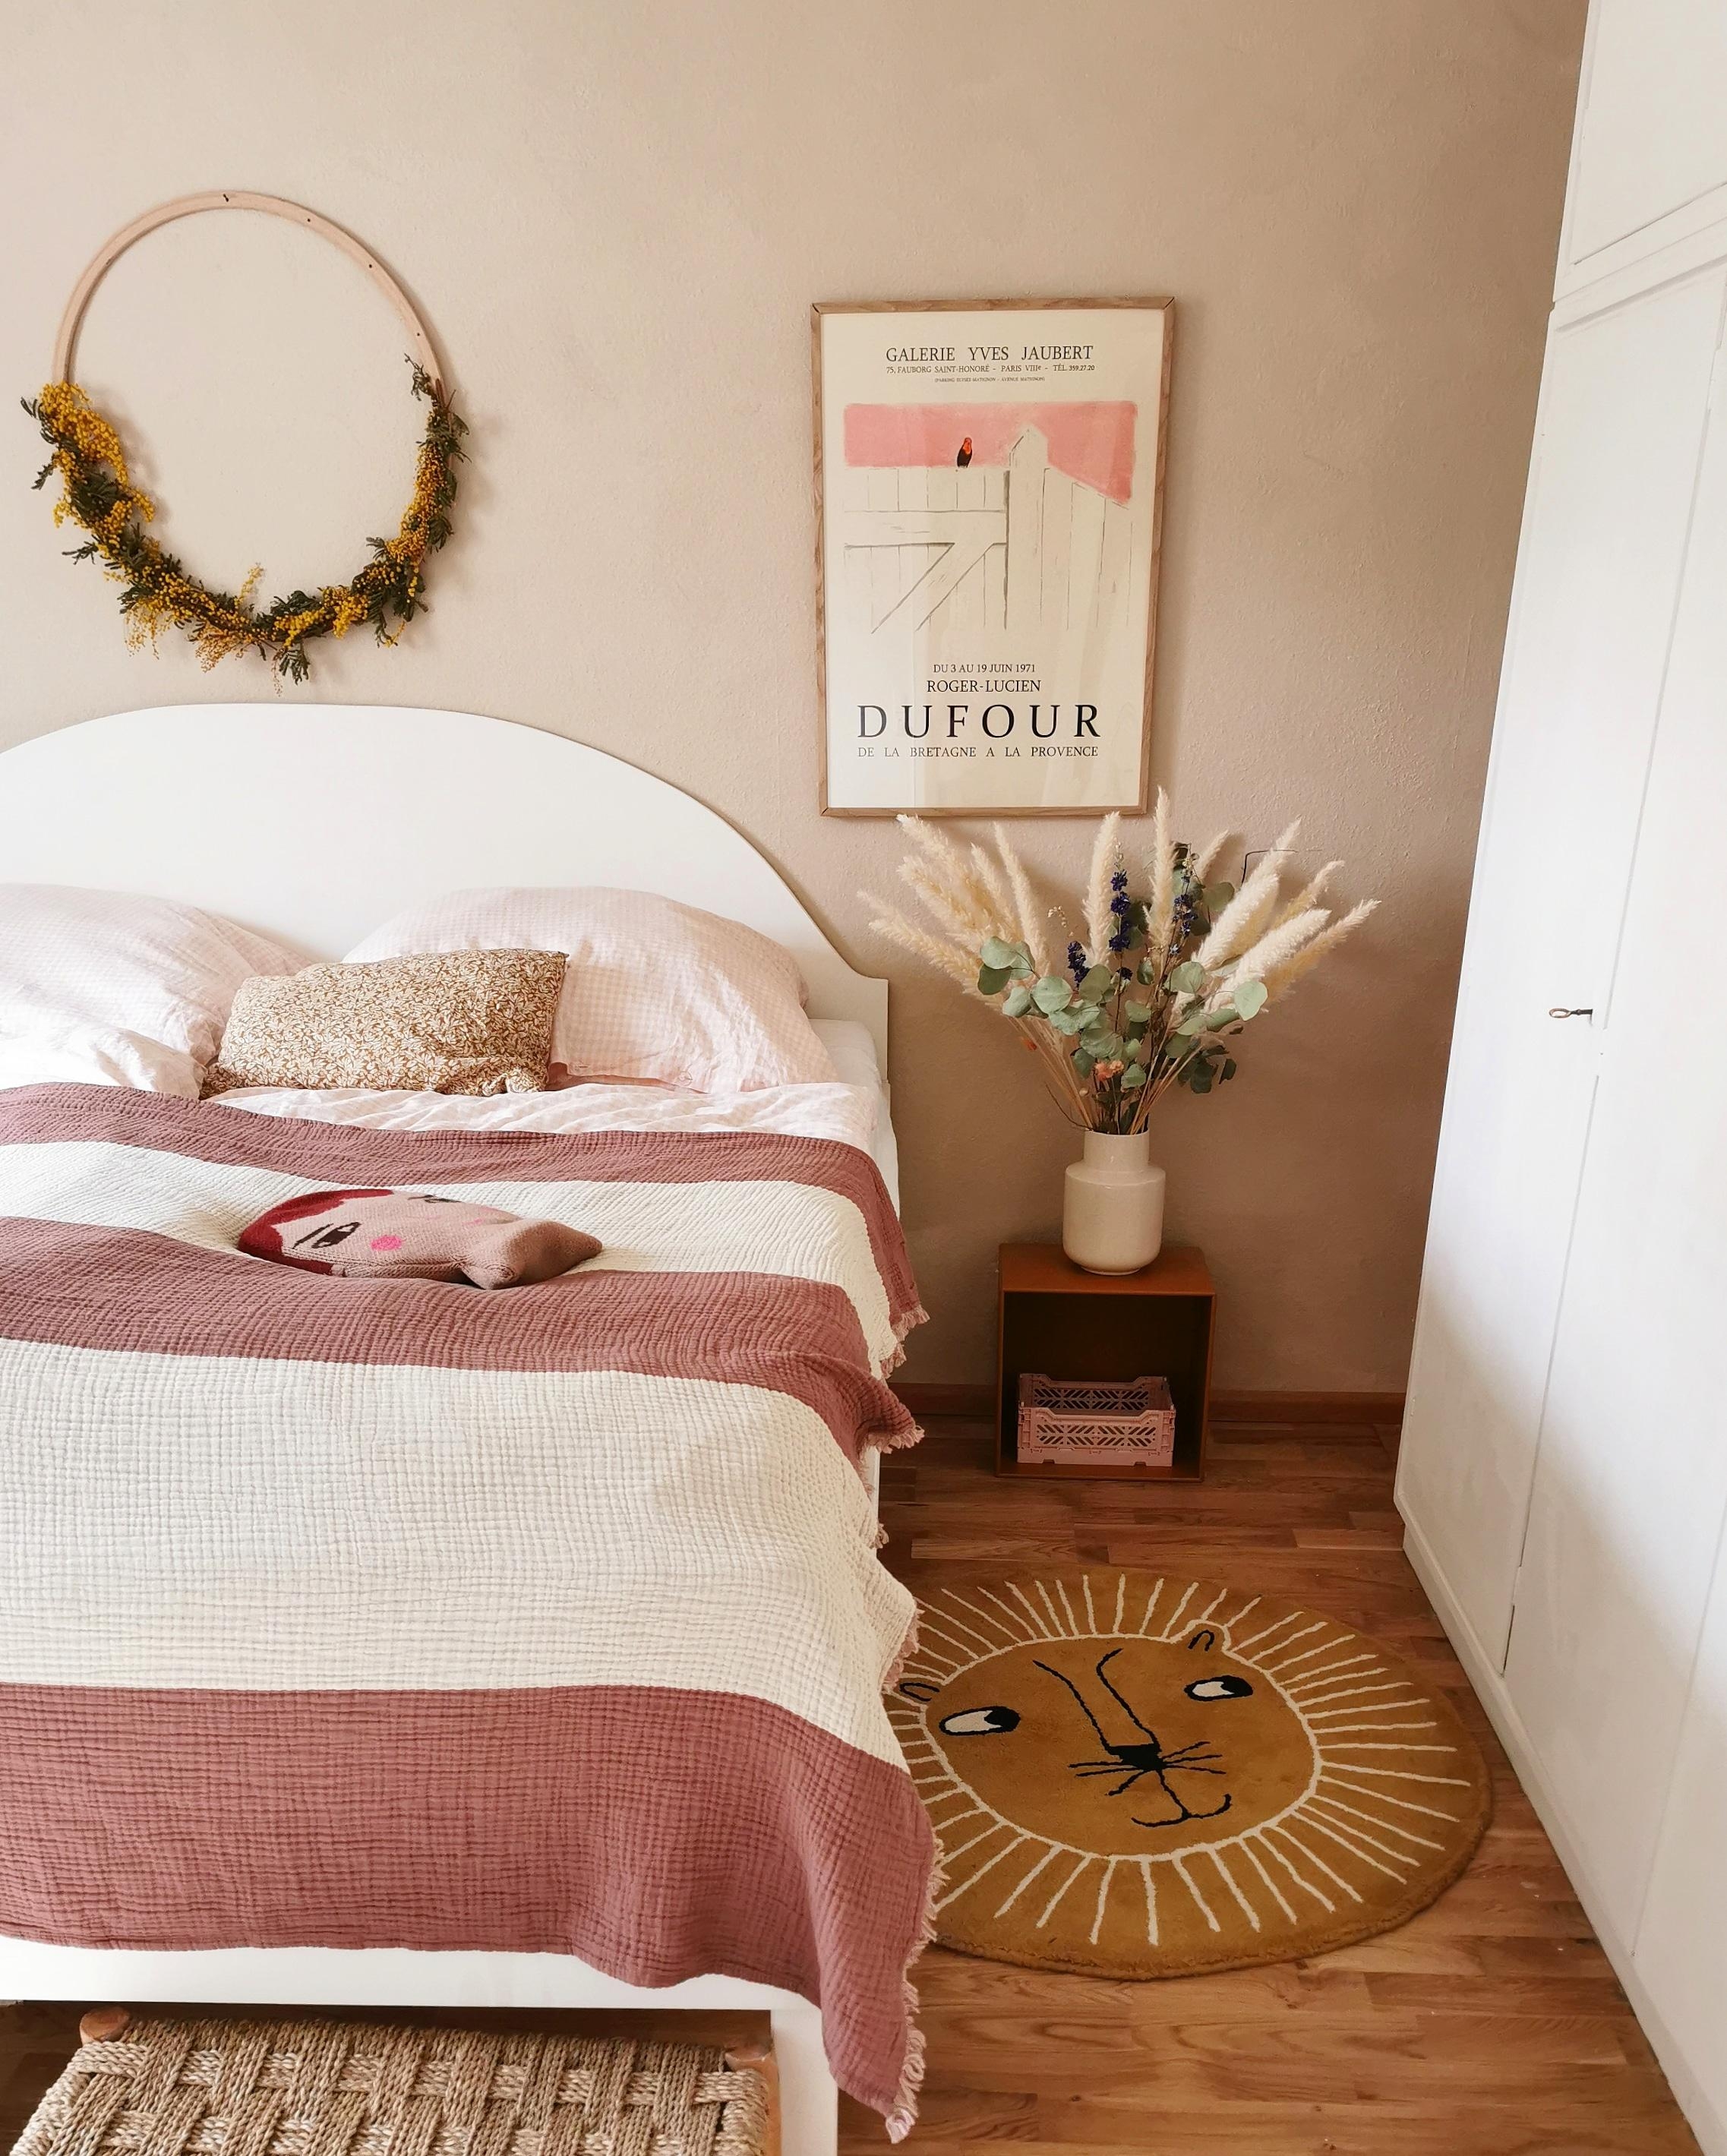 Unser Schlafzimmer in warmen, erdigen Tönen. 
#bedroom #placetobe